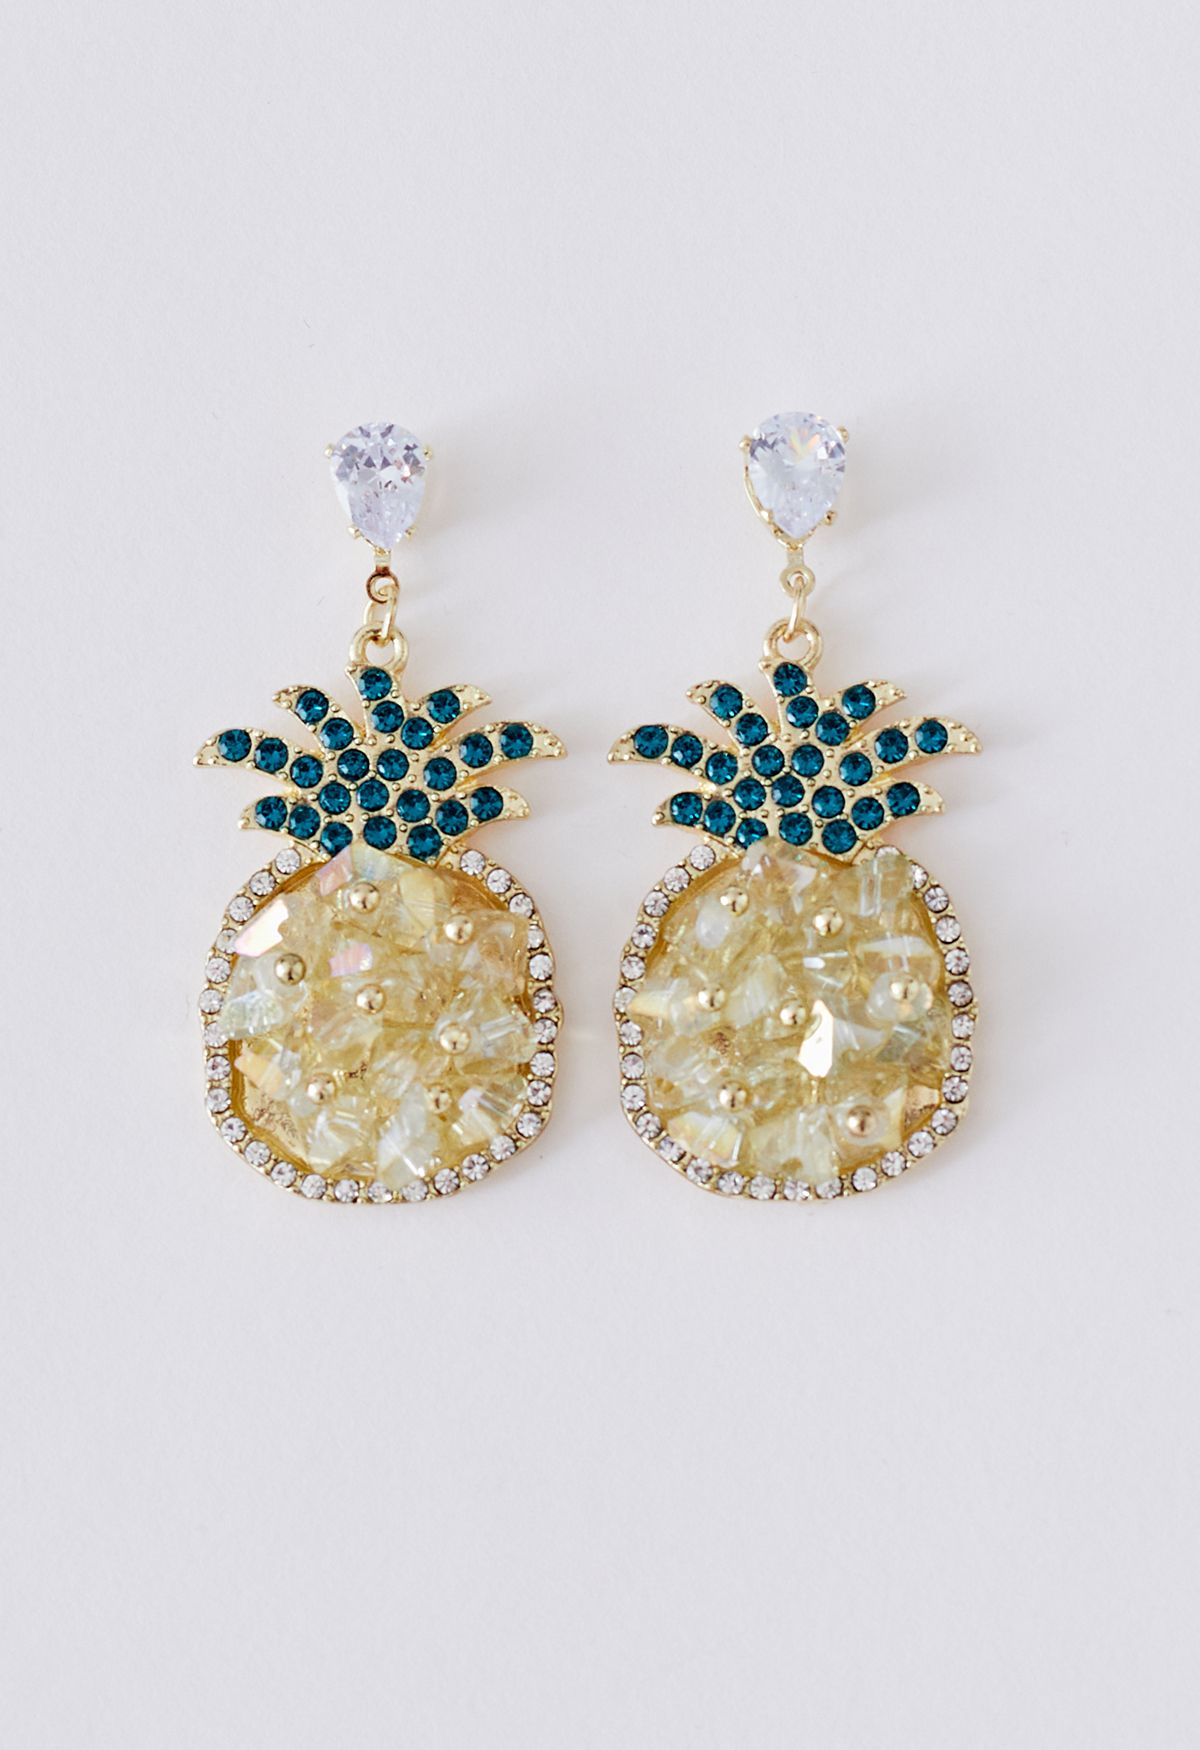 Glistening Pineapple Rhinestone Earrings